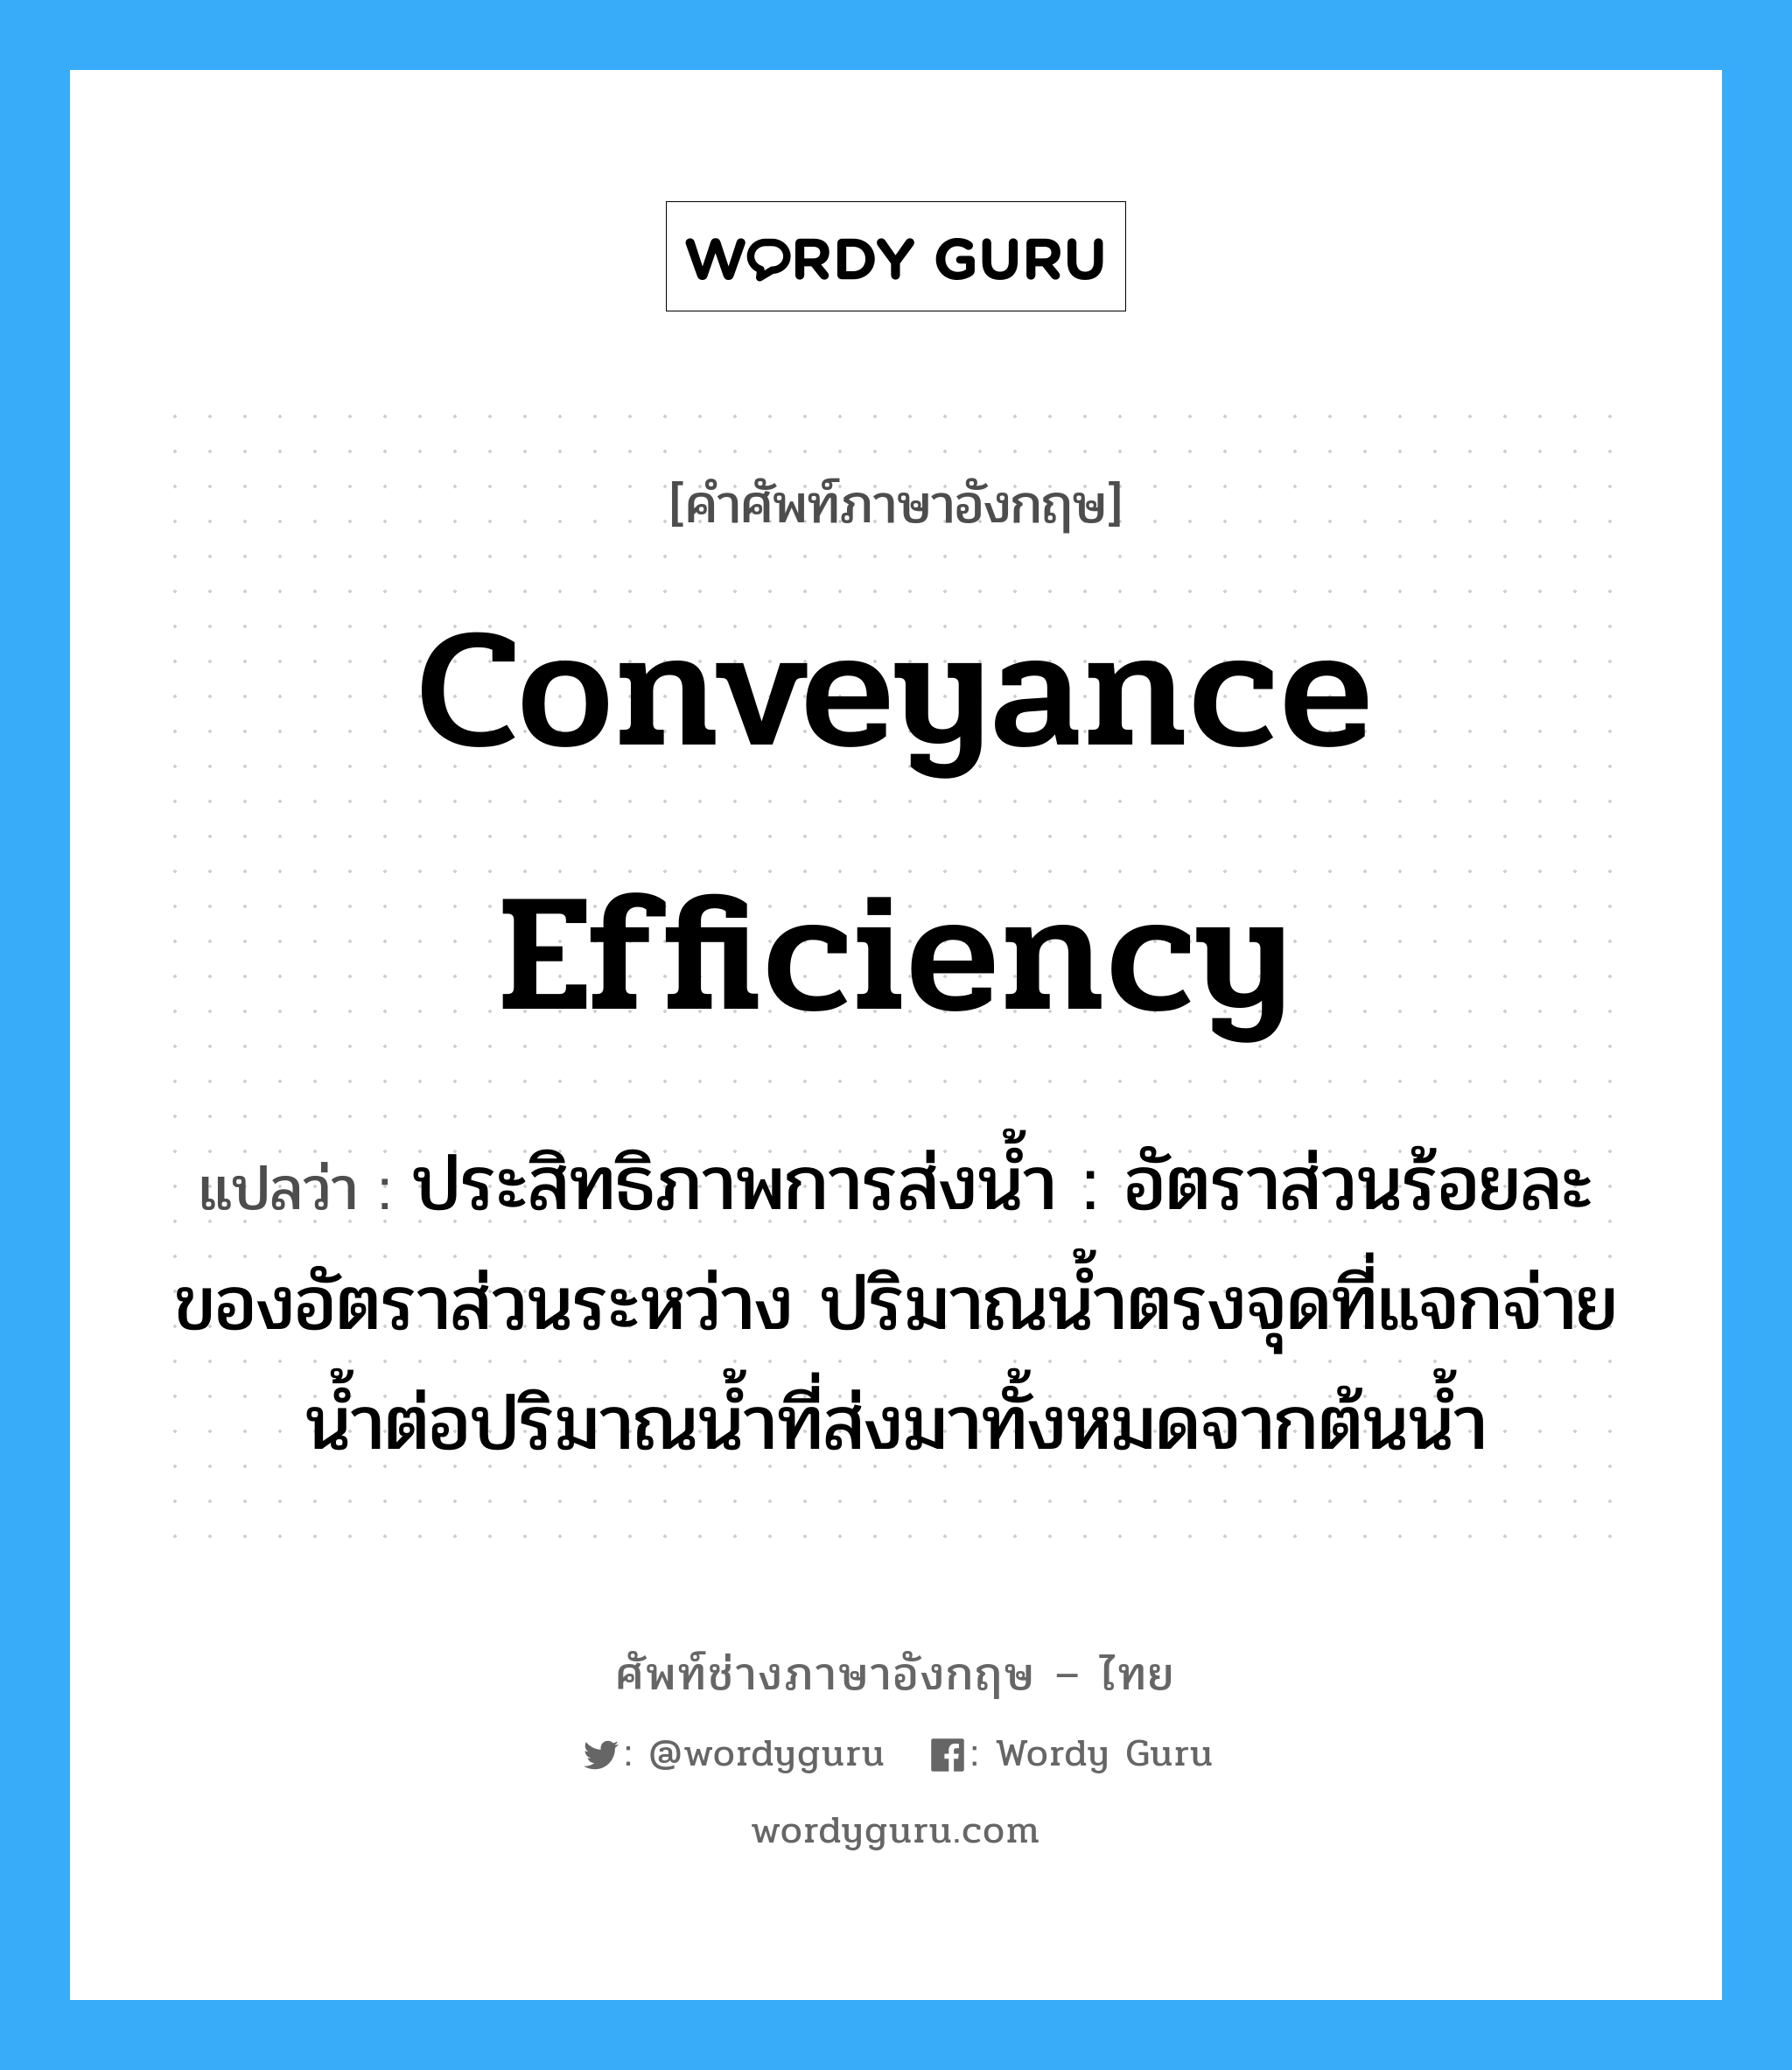 conveyance efficiency แปลว่า?, คำศัพท์ช่างภาษาอังกฤษ - ไทย conveyance efficiency คำศัพท์ภาษาอังกฤษ conveyance efficiency แปลว่า ประสิทธิภาพการส่งน้ำ : อัตราส่วนร้อยละของอัตราส่วนระหว่าง ปริมาณน้ำตรงจุดที่แจกจ่ายน้ำต่อปริมาณน้ำที่ส่งมาทั้งหมดจากต้นน้ำ